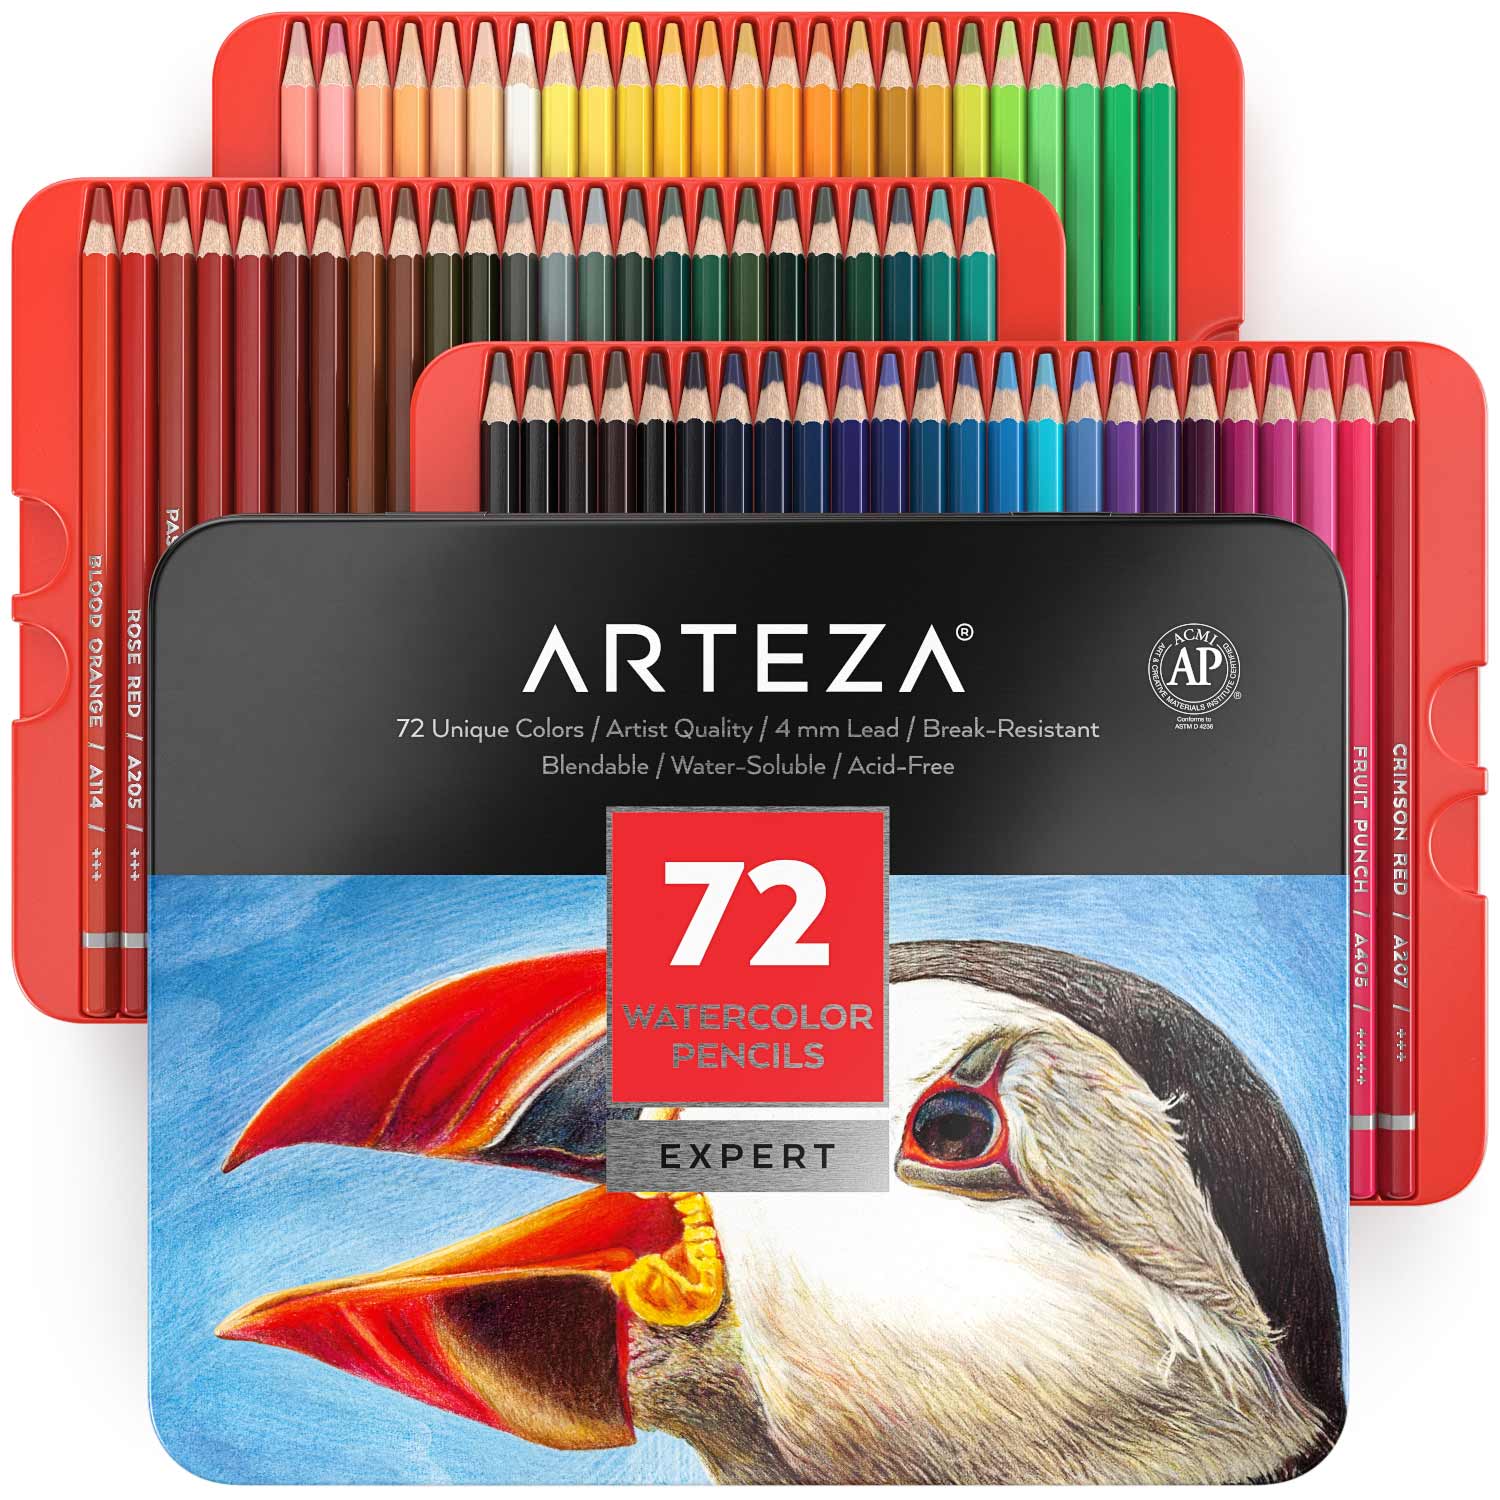 72 Lapices De Colores Profesional Arteza A Pedido!